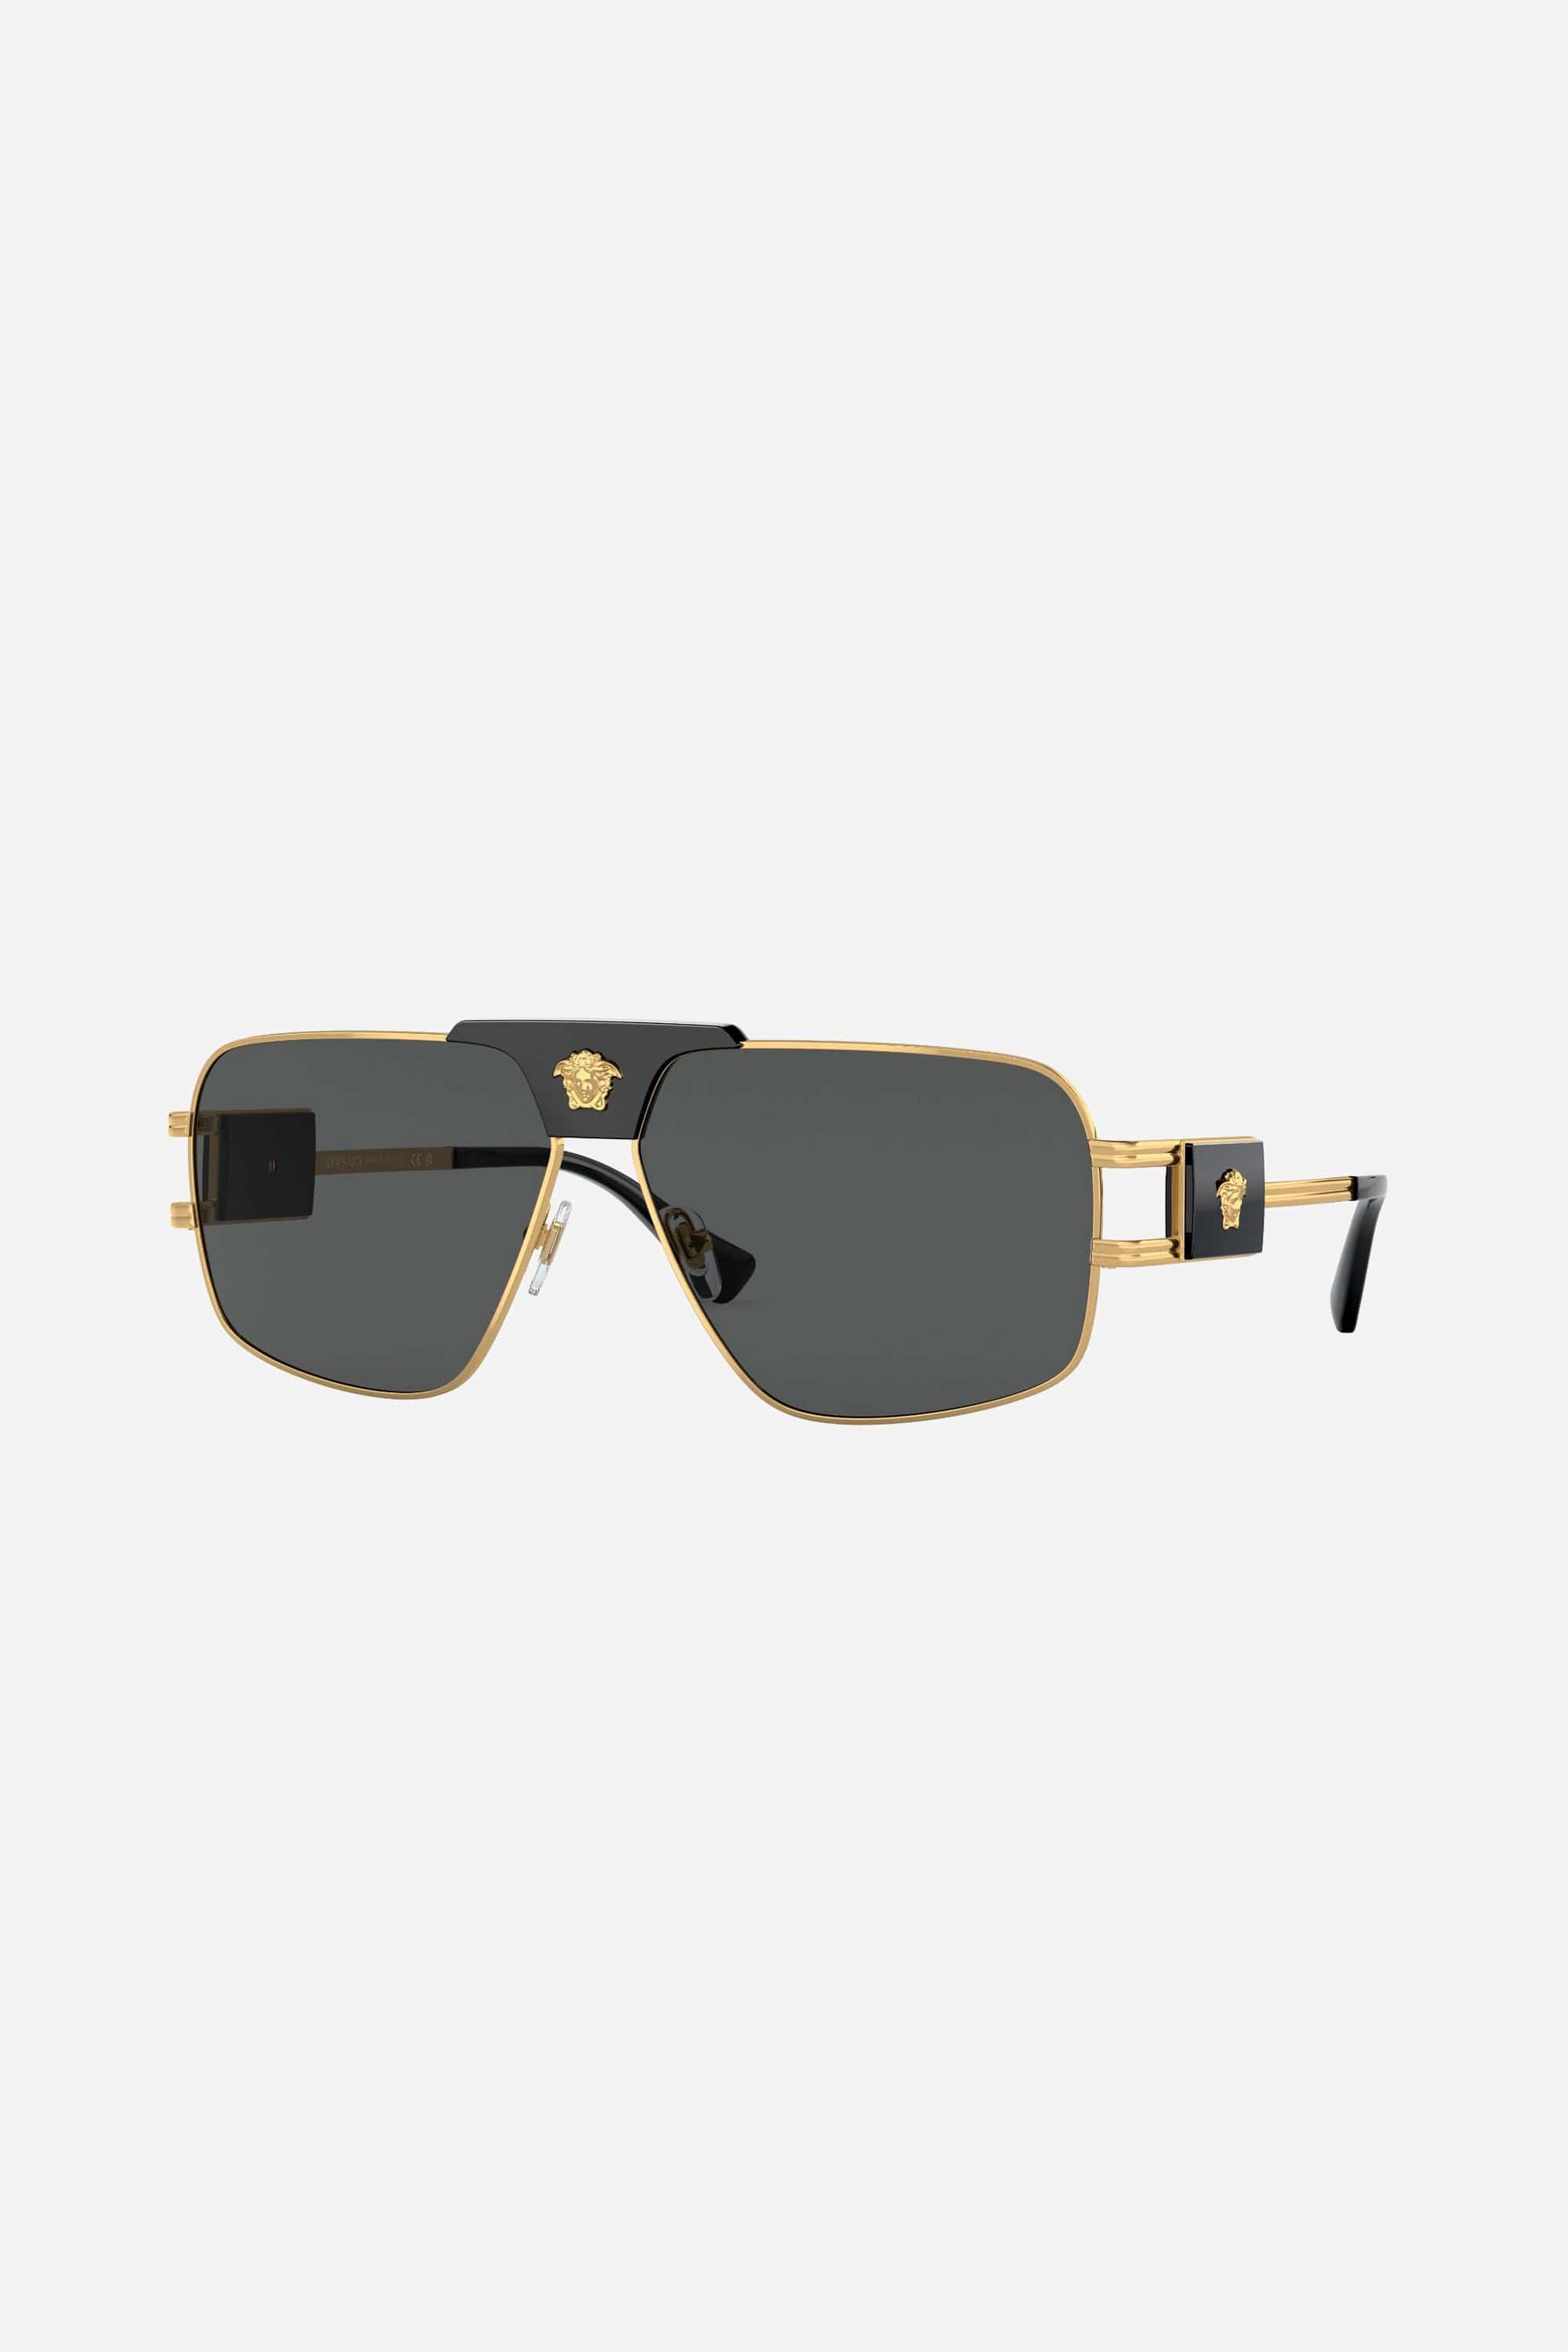 Versace black metal pilot sunglasses with gold details - Eyewear Club